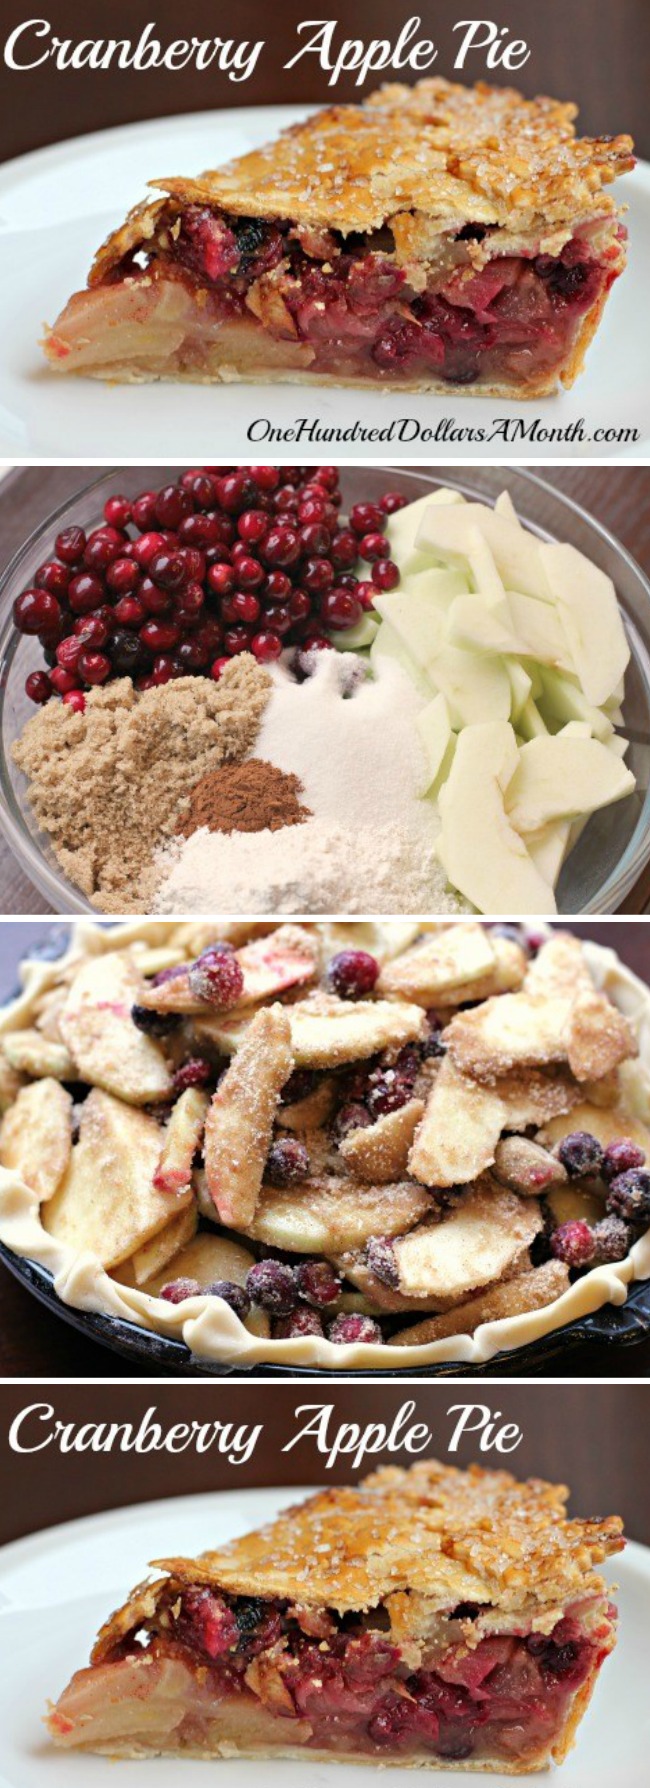 Thanksgiving Dessert Recipes – Cranberry Apple Pie